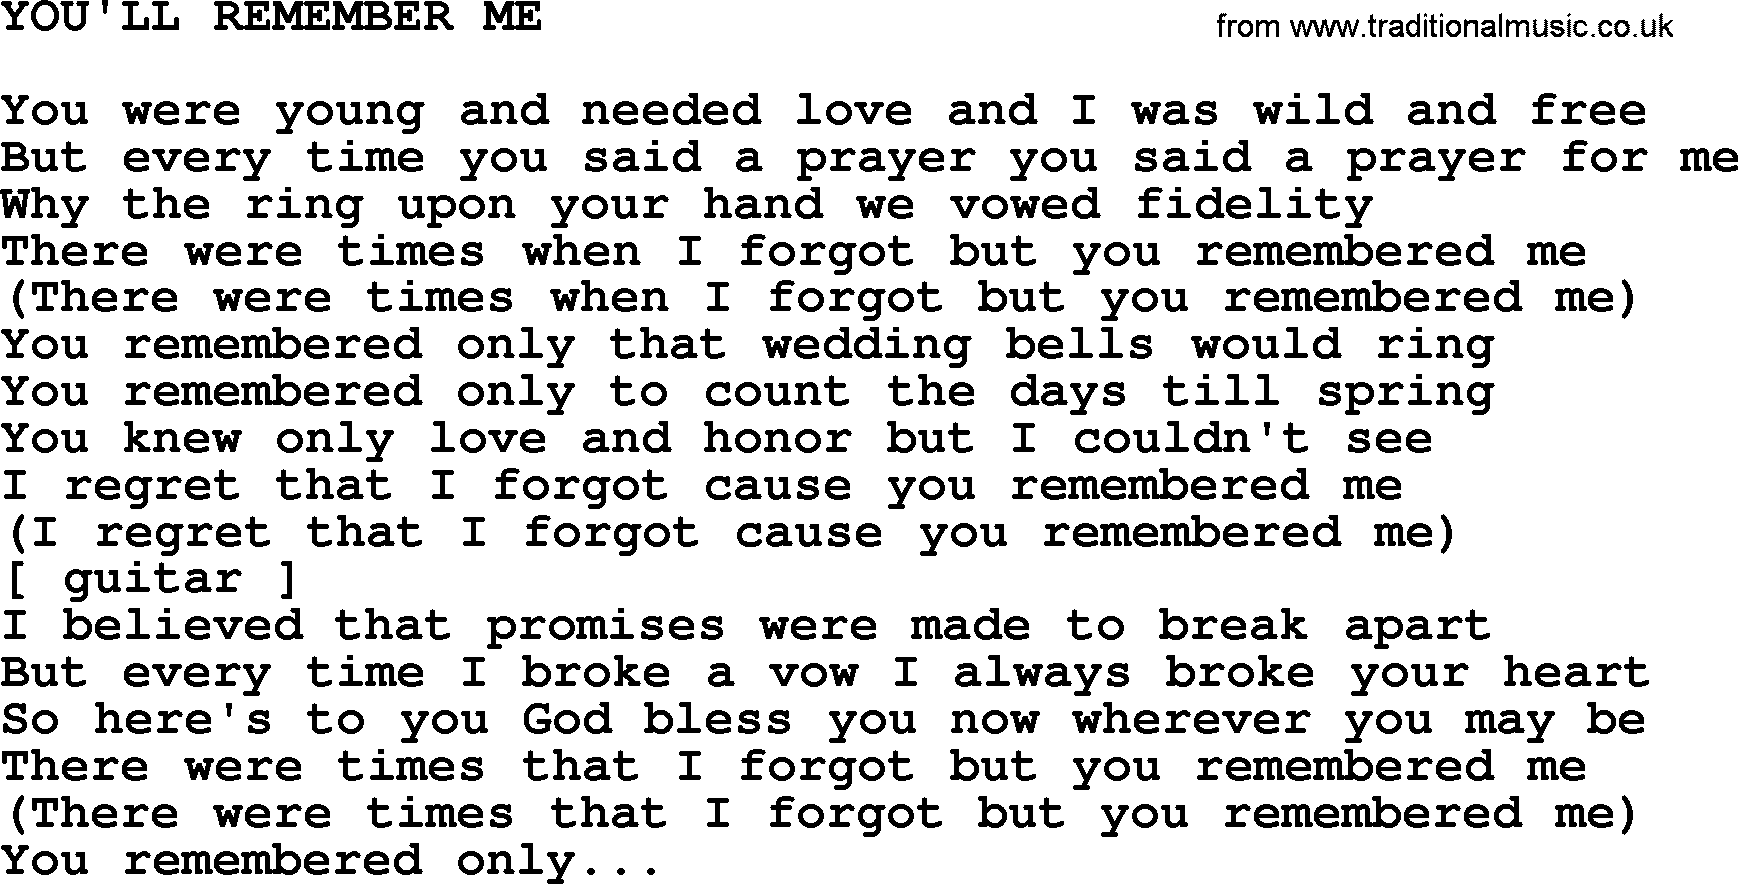 Johnny Cash song You'll Remember Me.txt lyrics